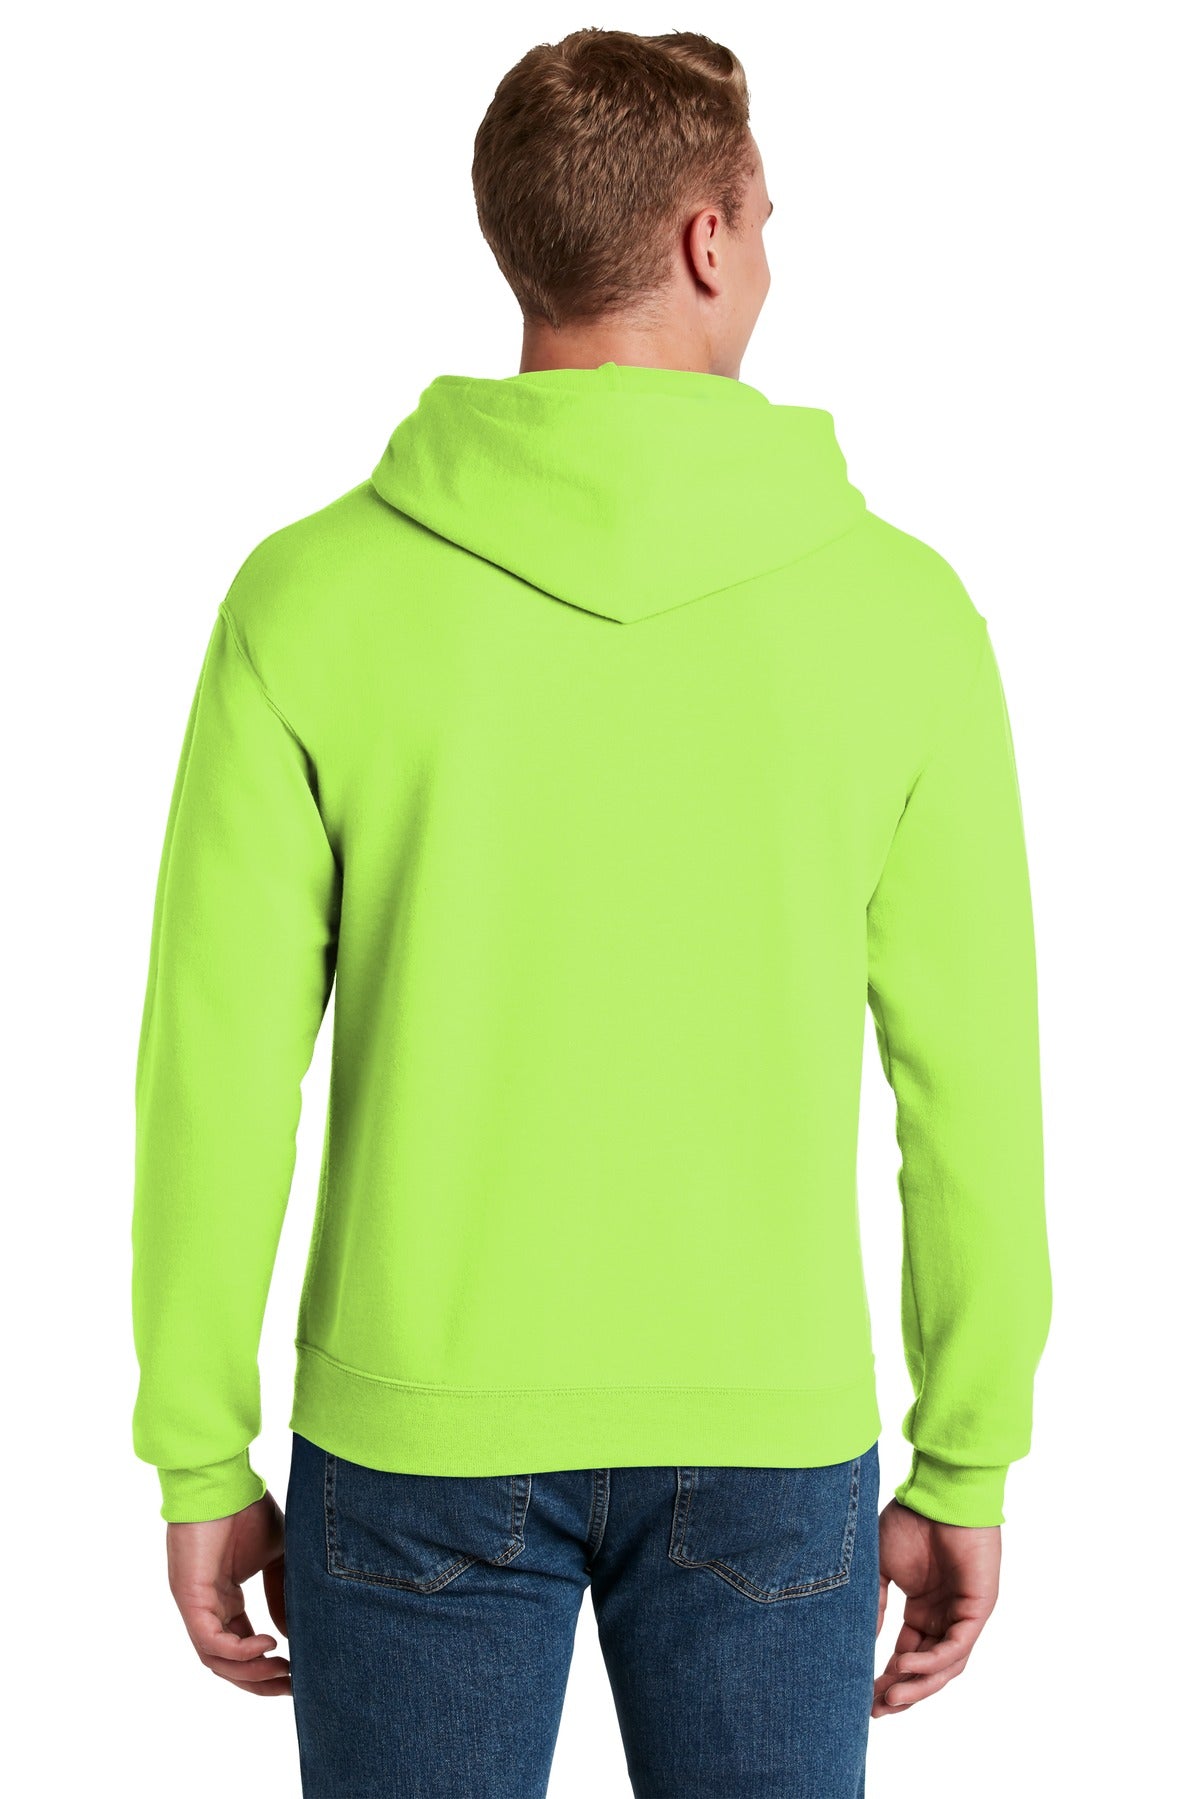 Jerzees - NuBlend Pullover Hooded Sweatshirt. 996M - Neon Green